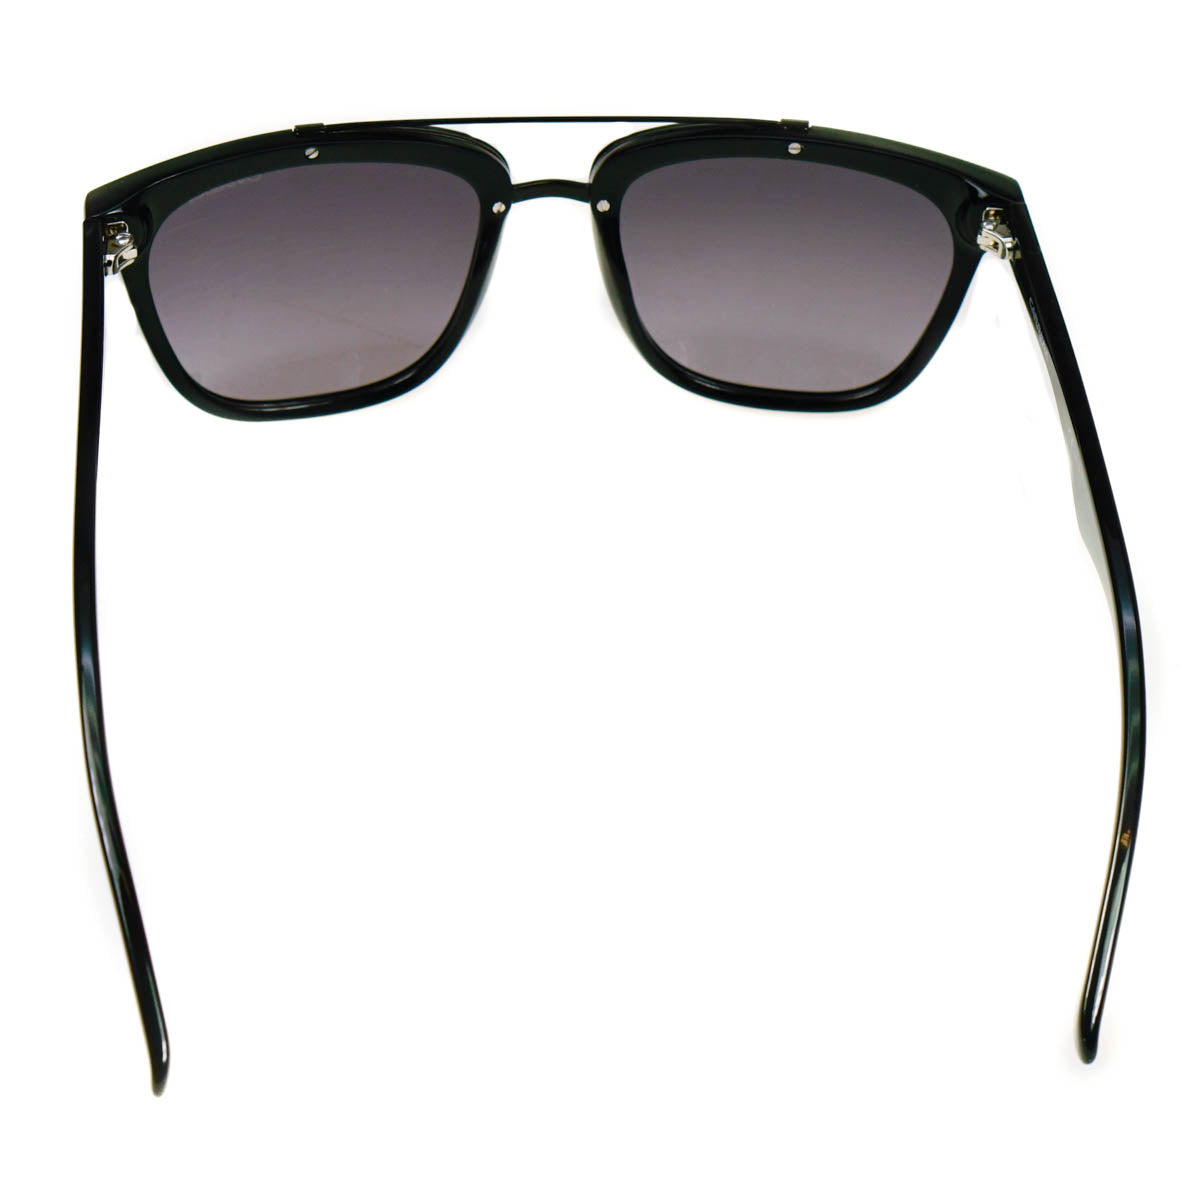 Carrera Men's Black Sunglasses 6002 807